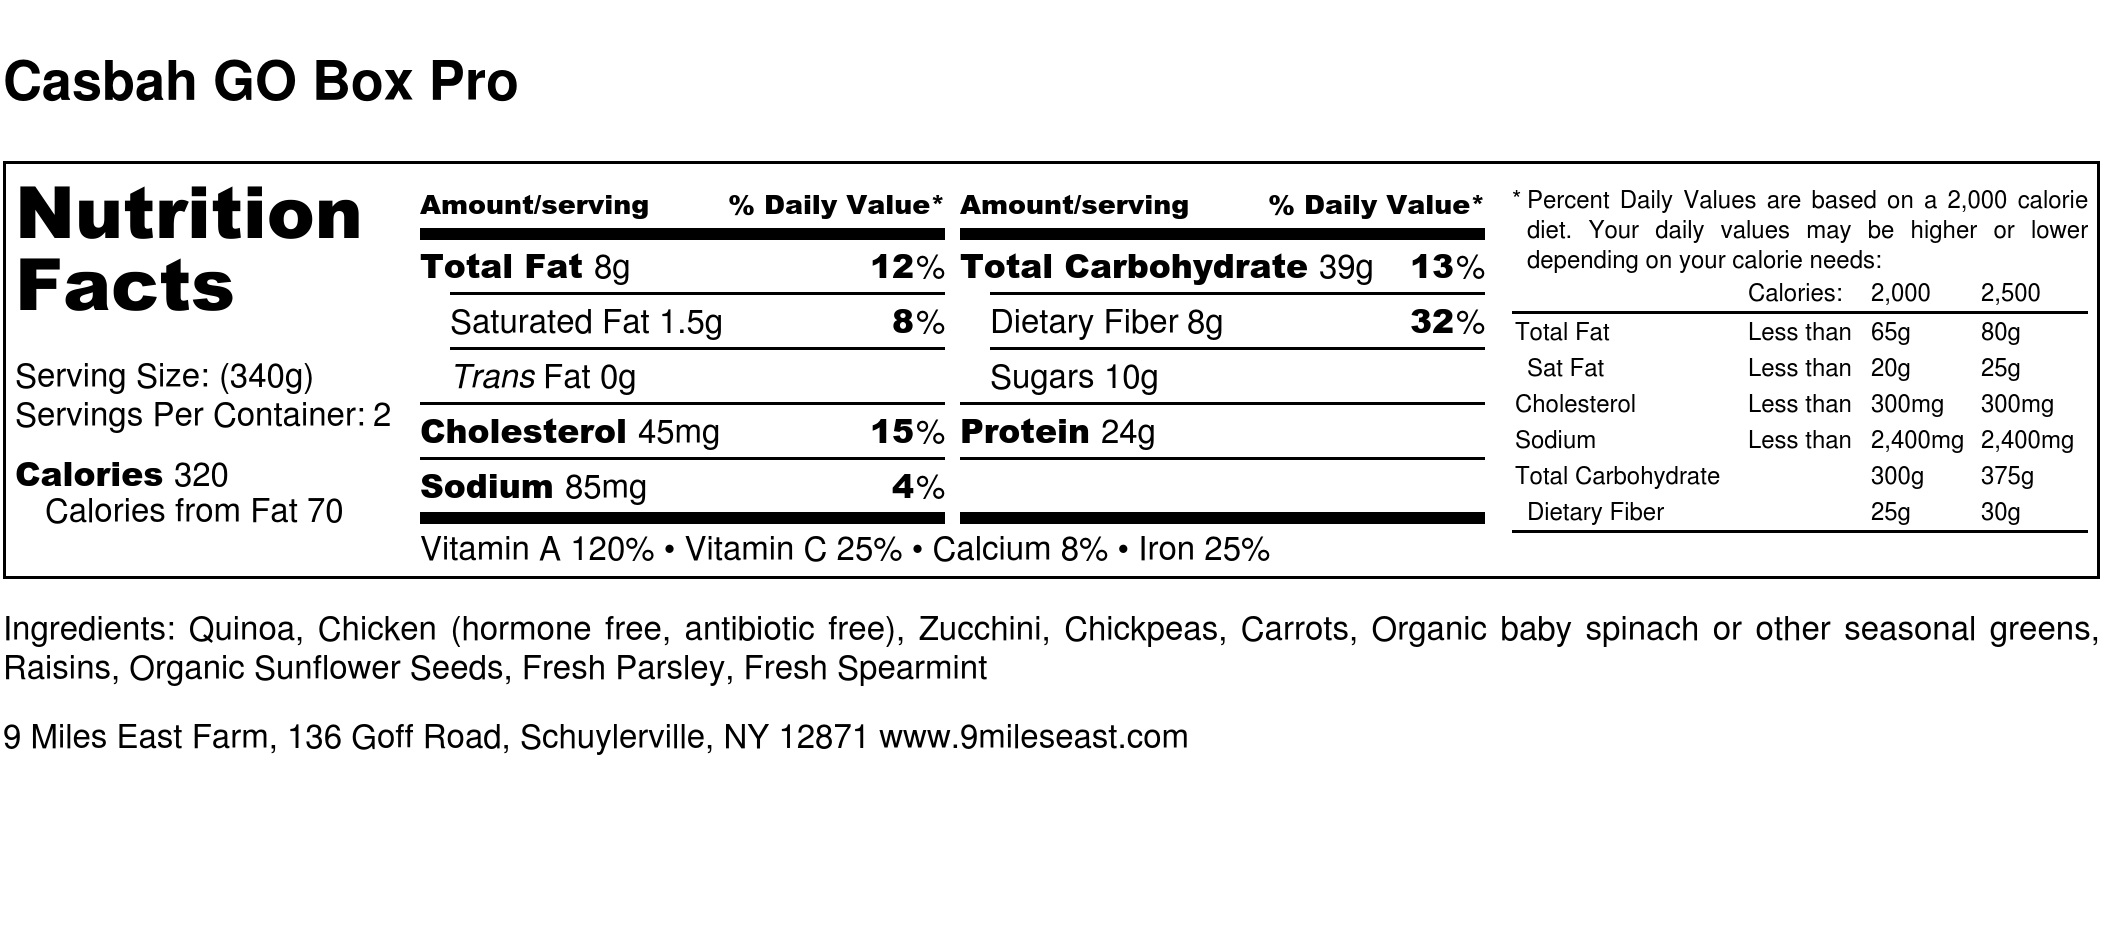 Casbah GO Box Pro - Nutrition Label.jpg